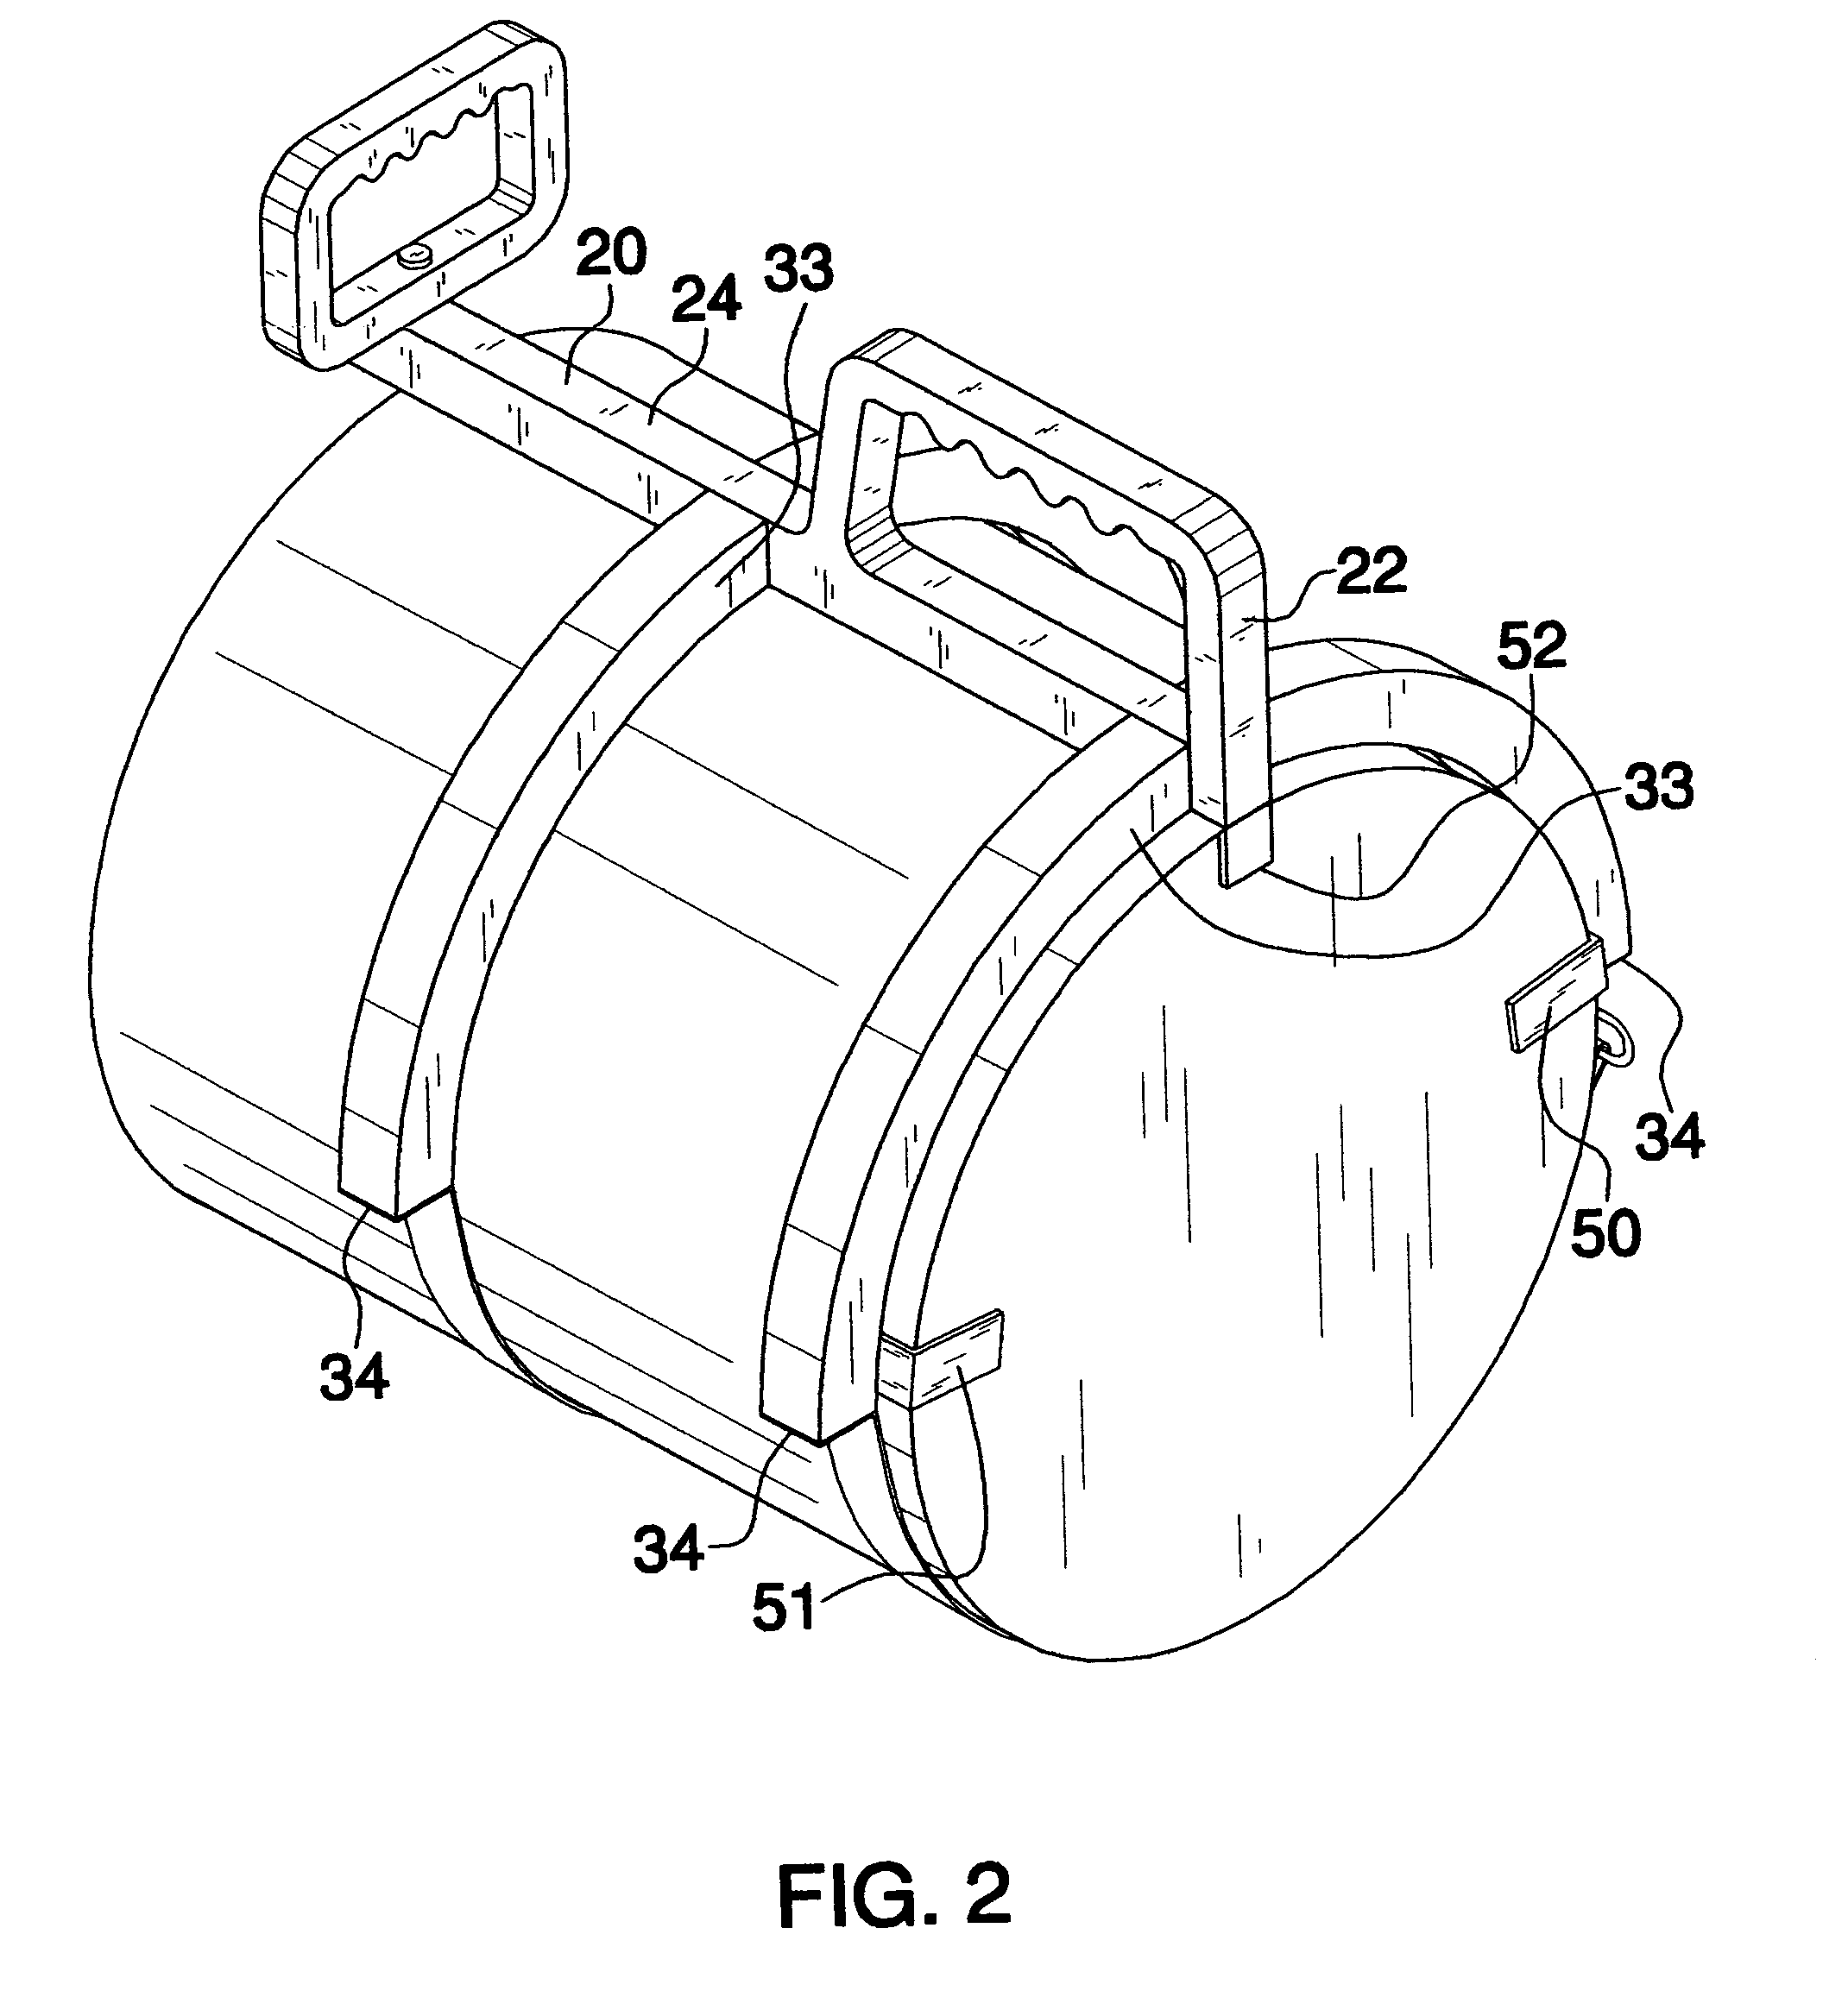 Bucket lifting apparatus and method